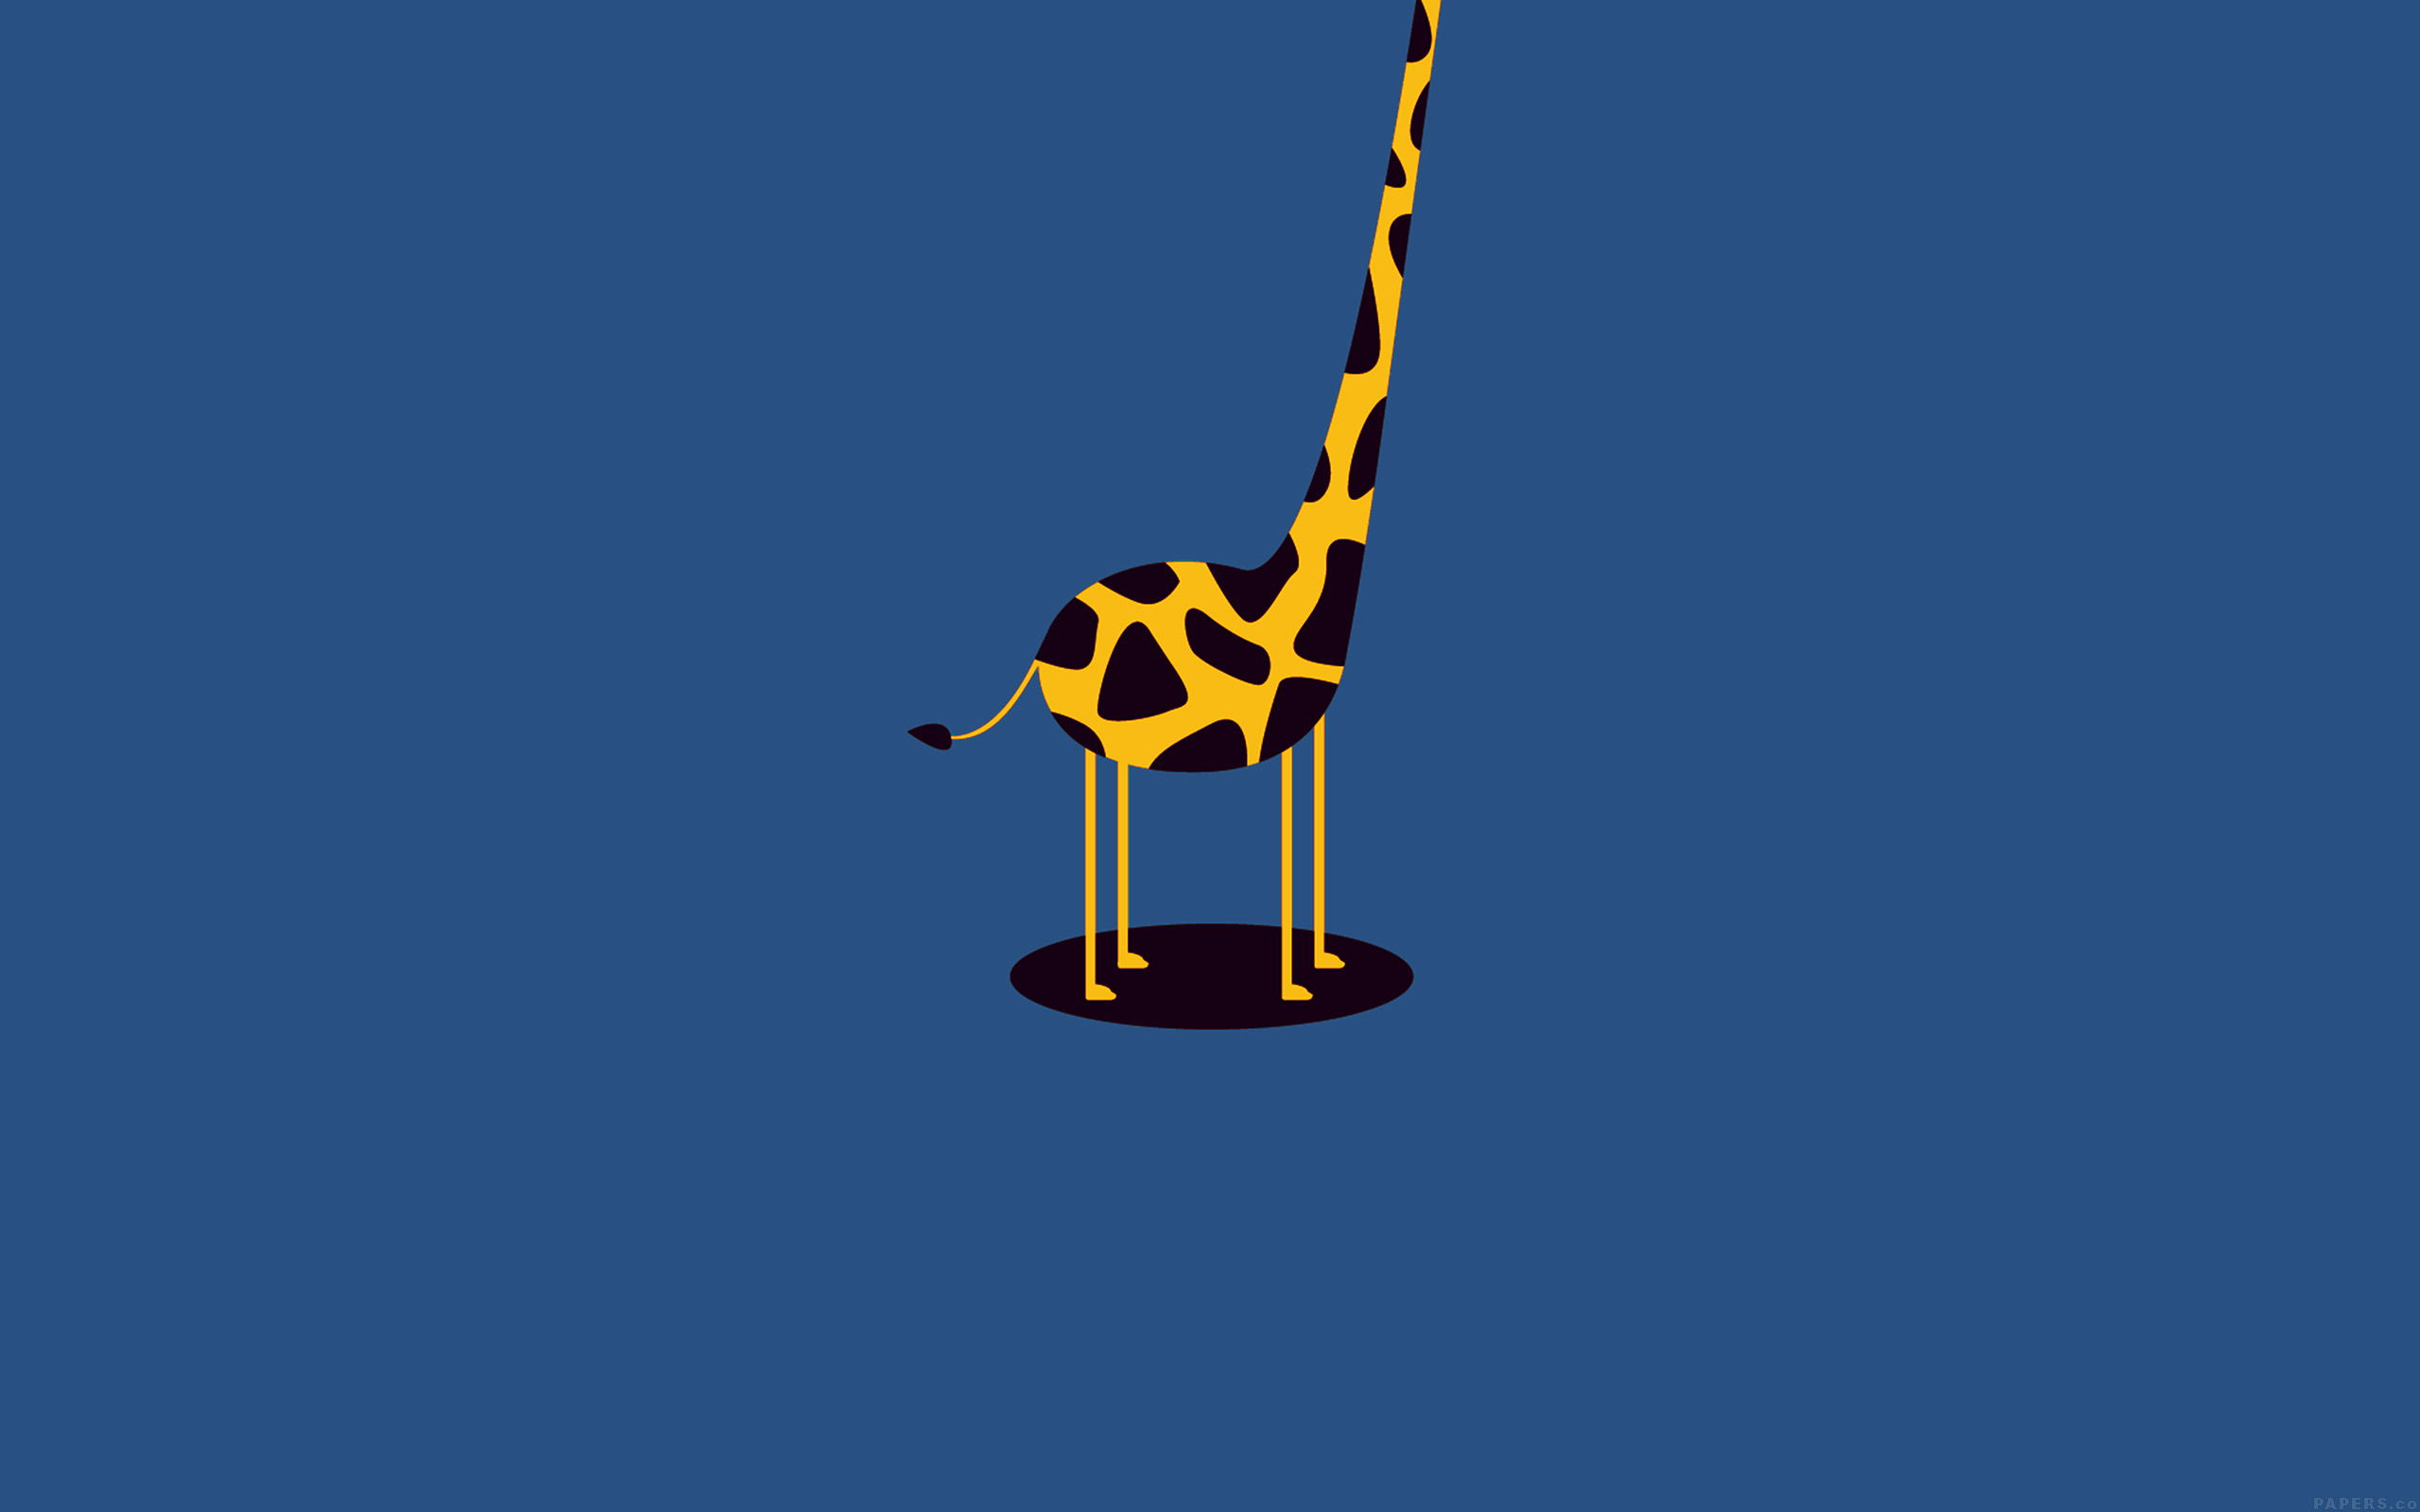 papel pintado lindo y simple,jirafa,giraffidae,bandera